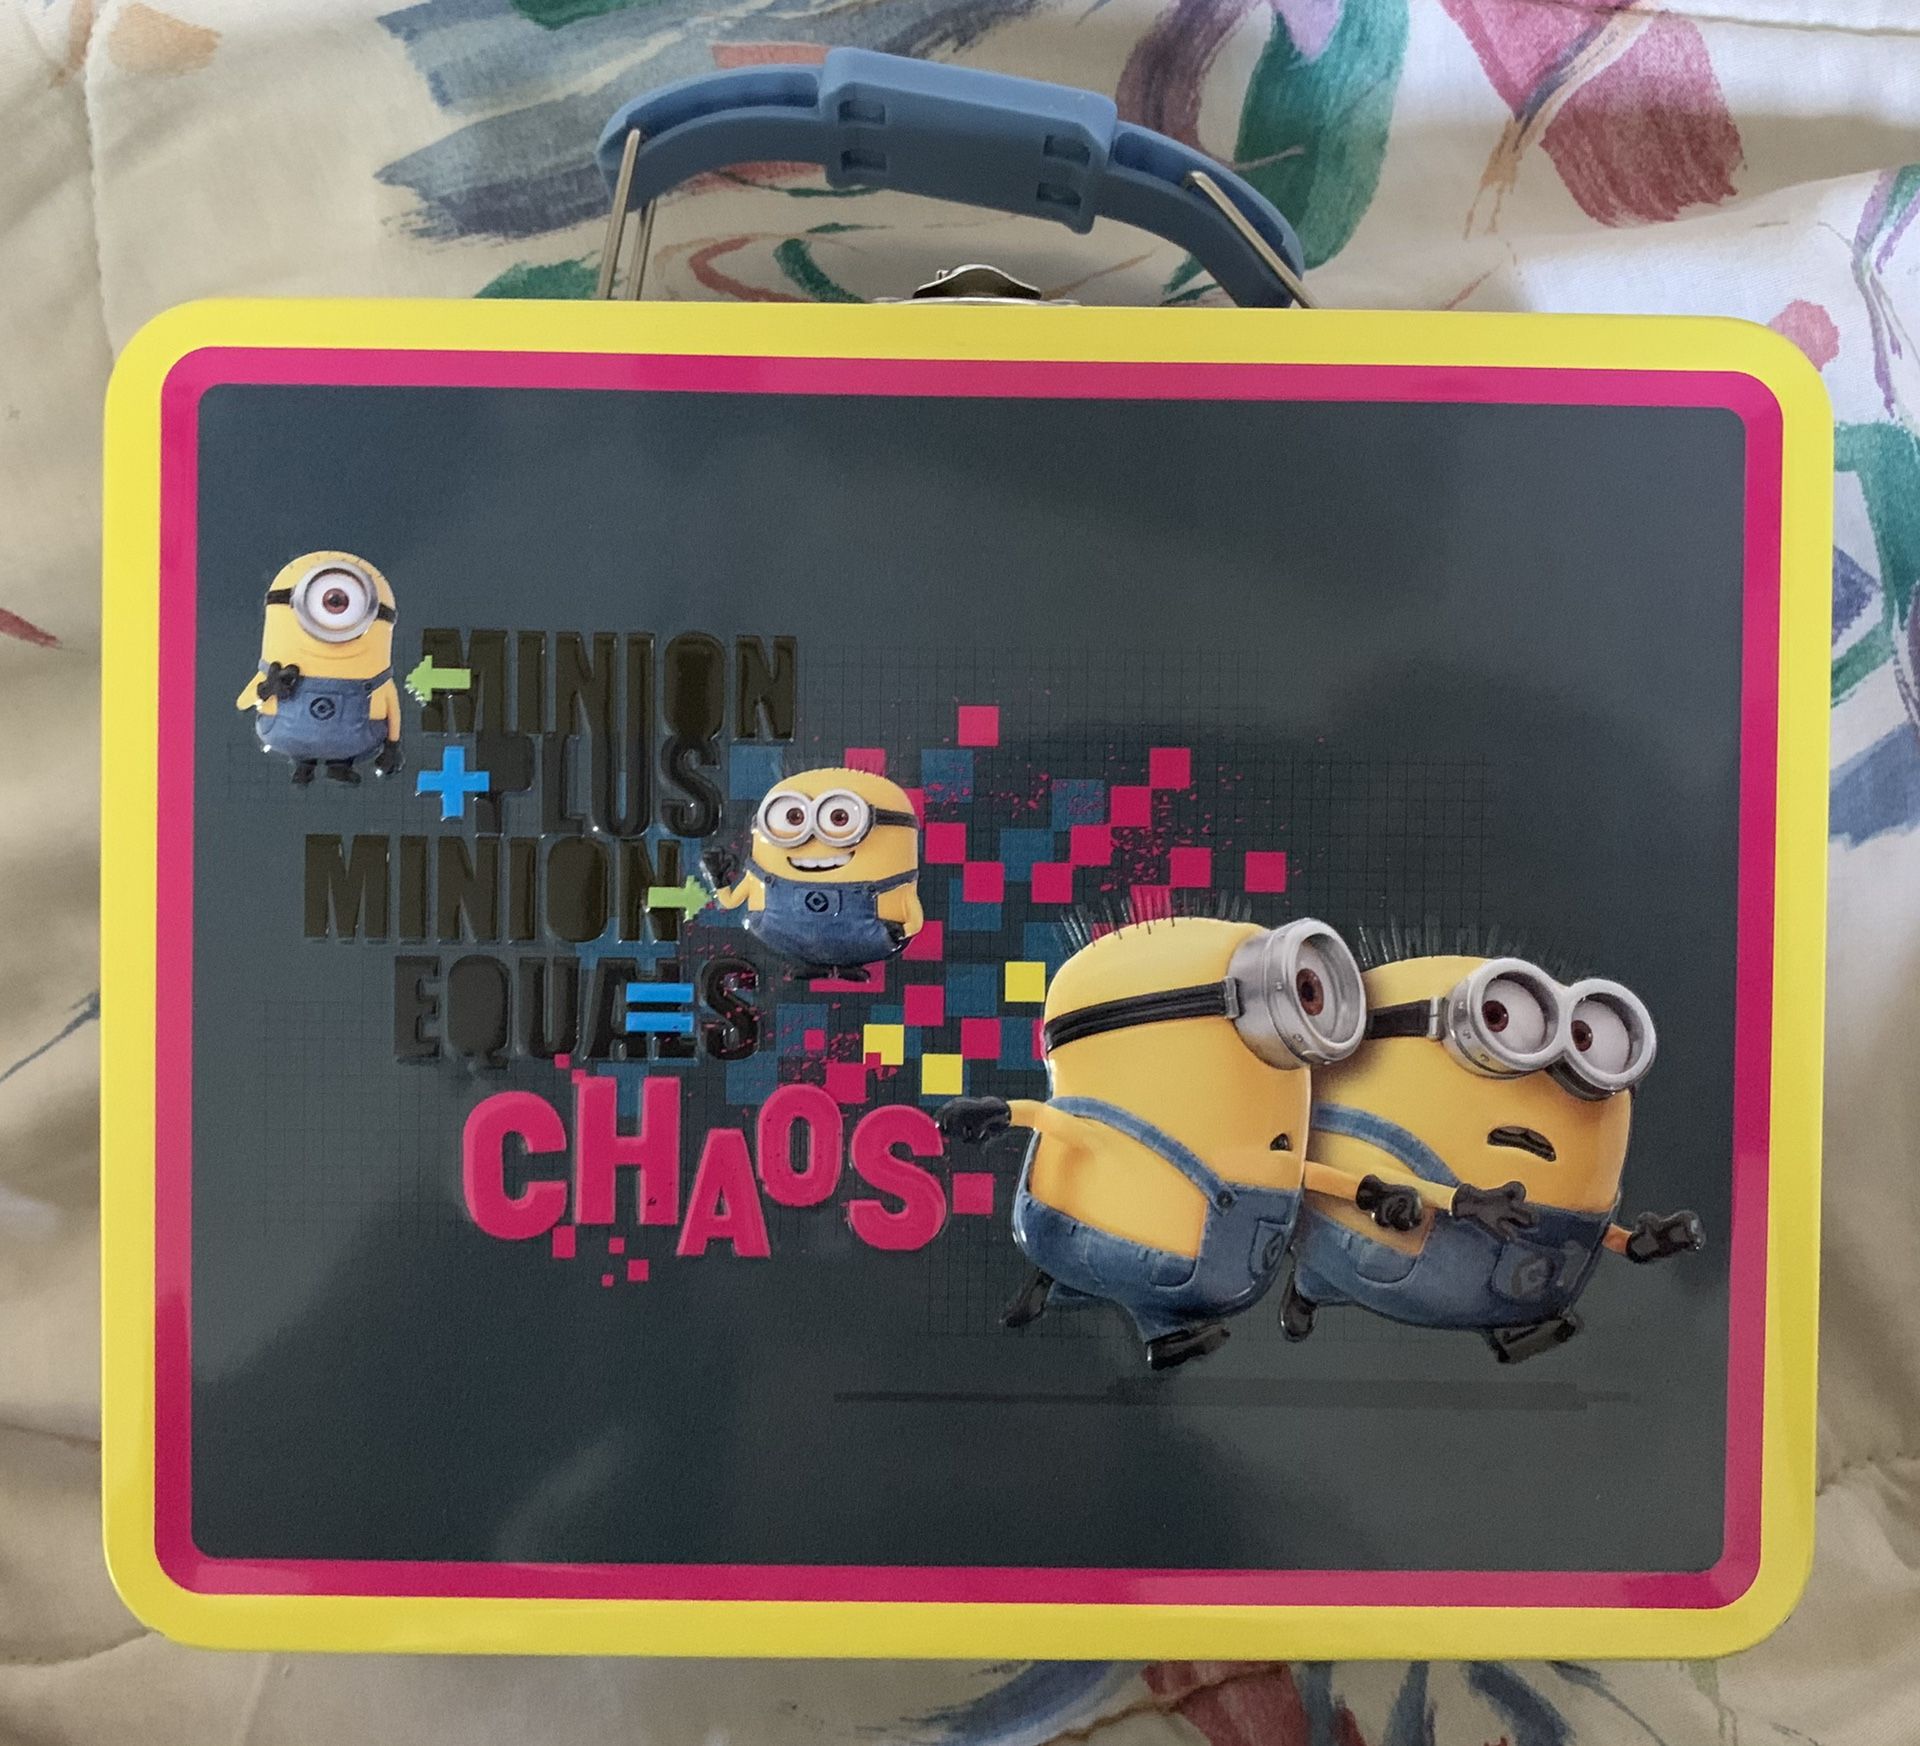 Minion Plus Minion Equals Chaos Tin Lunchbox Despicable Me